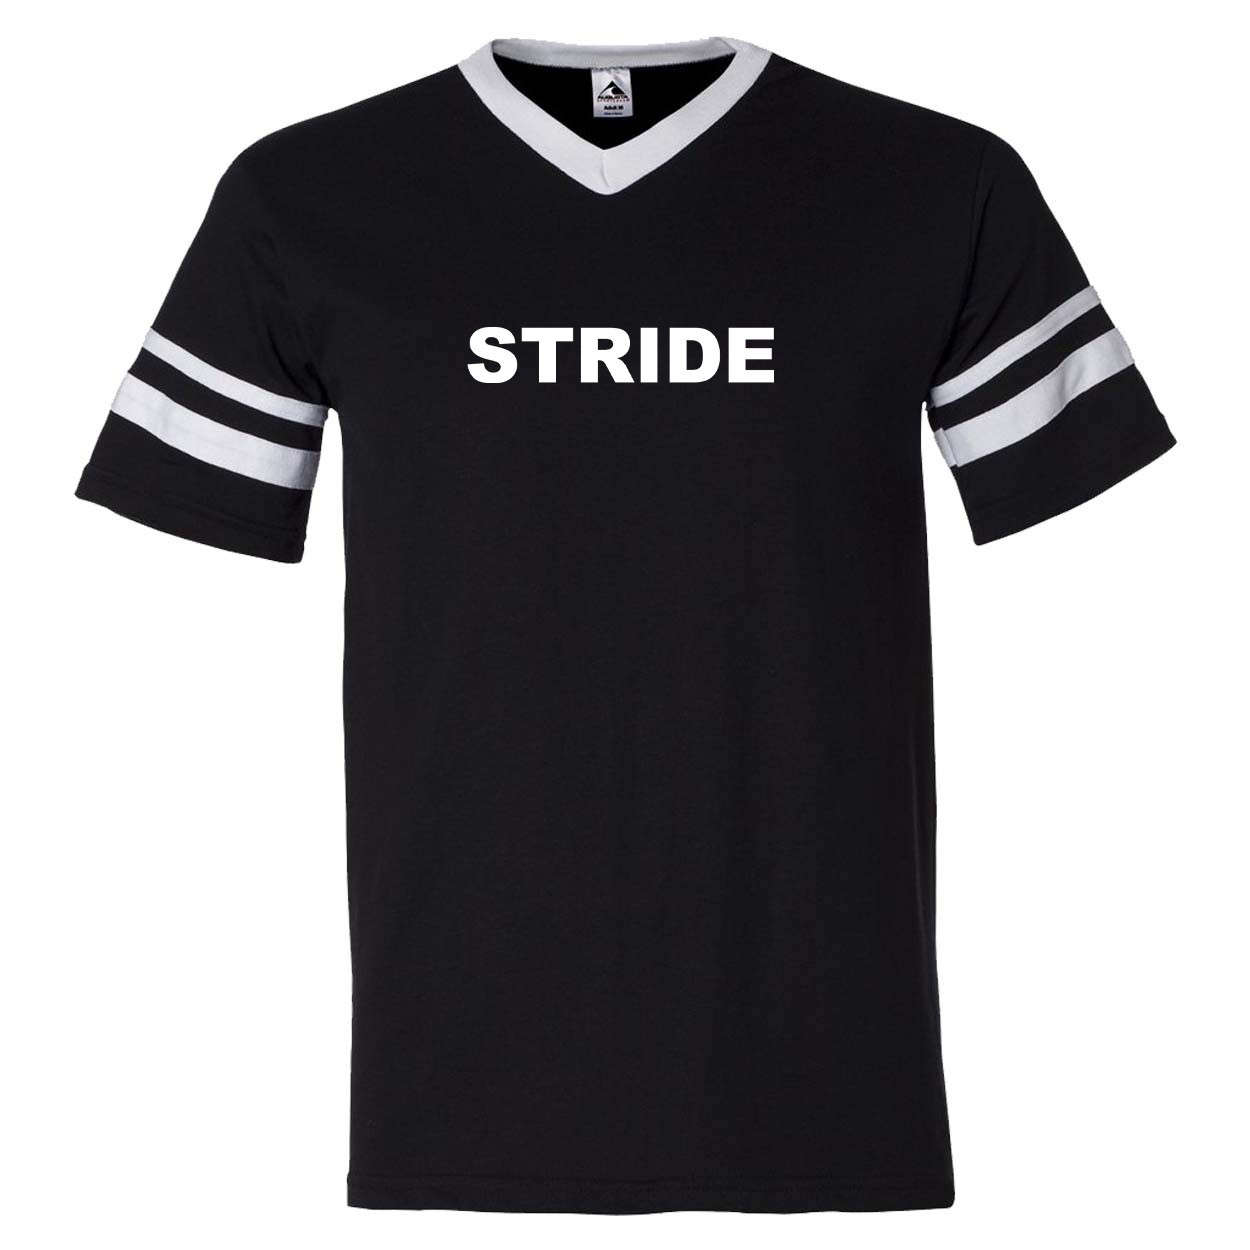 Stride Brand Logo Classic Premium Striped Jersey T-Shirt Black/White (White Logo)